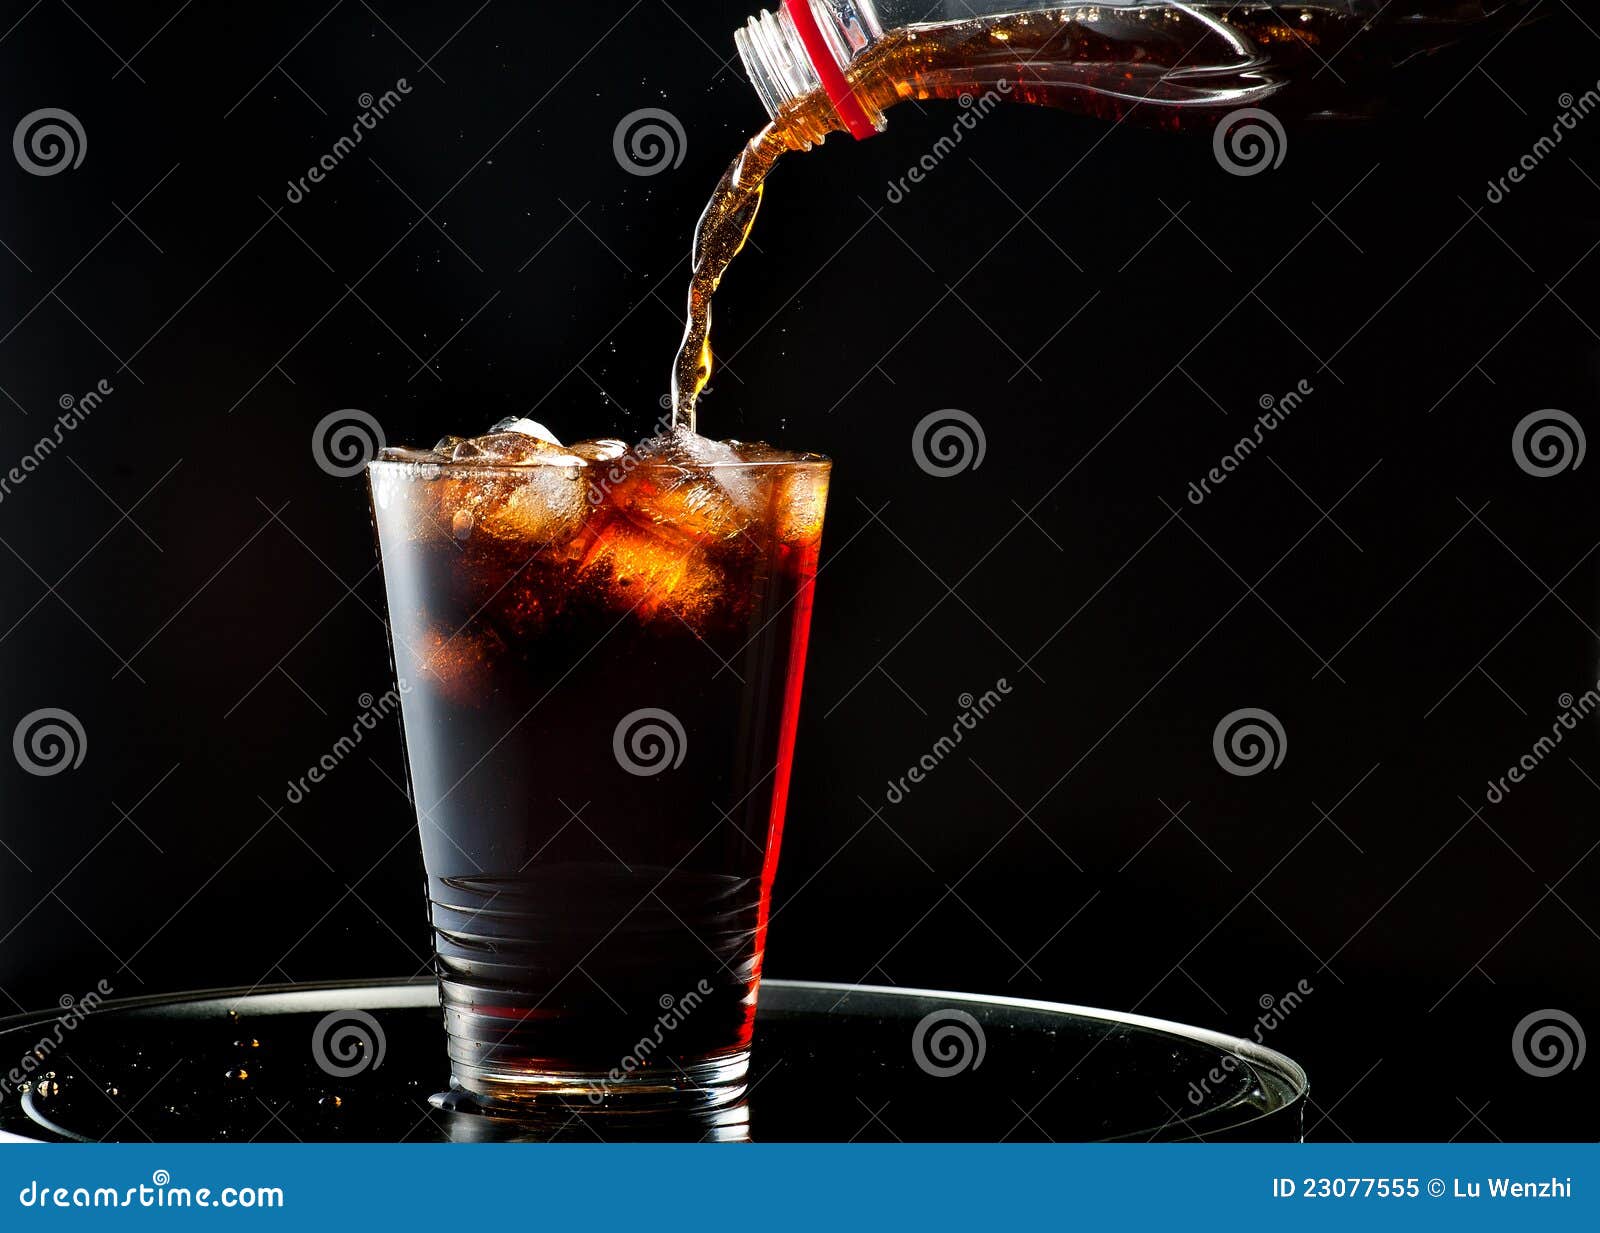 full glass of cola